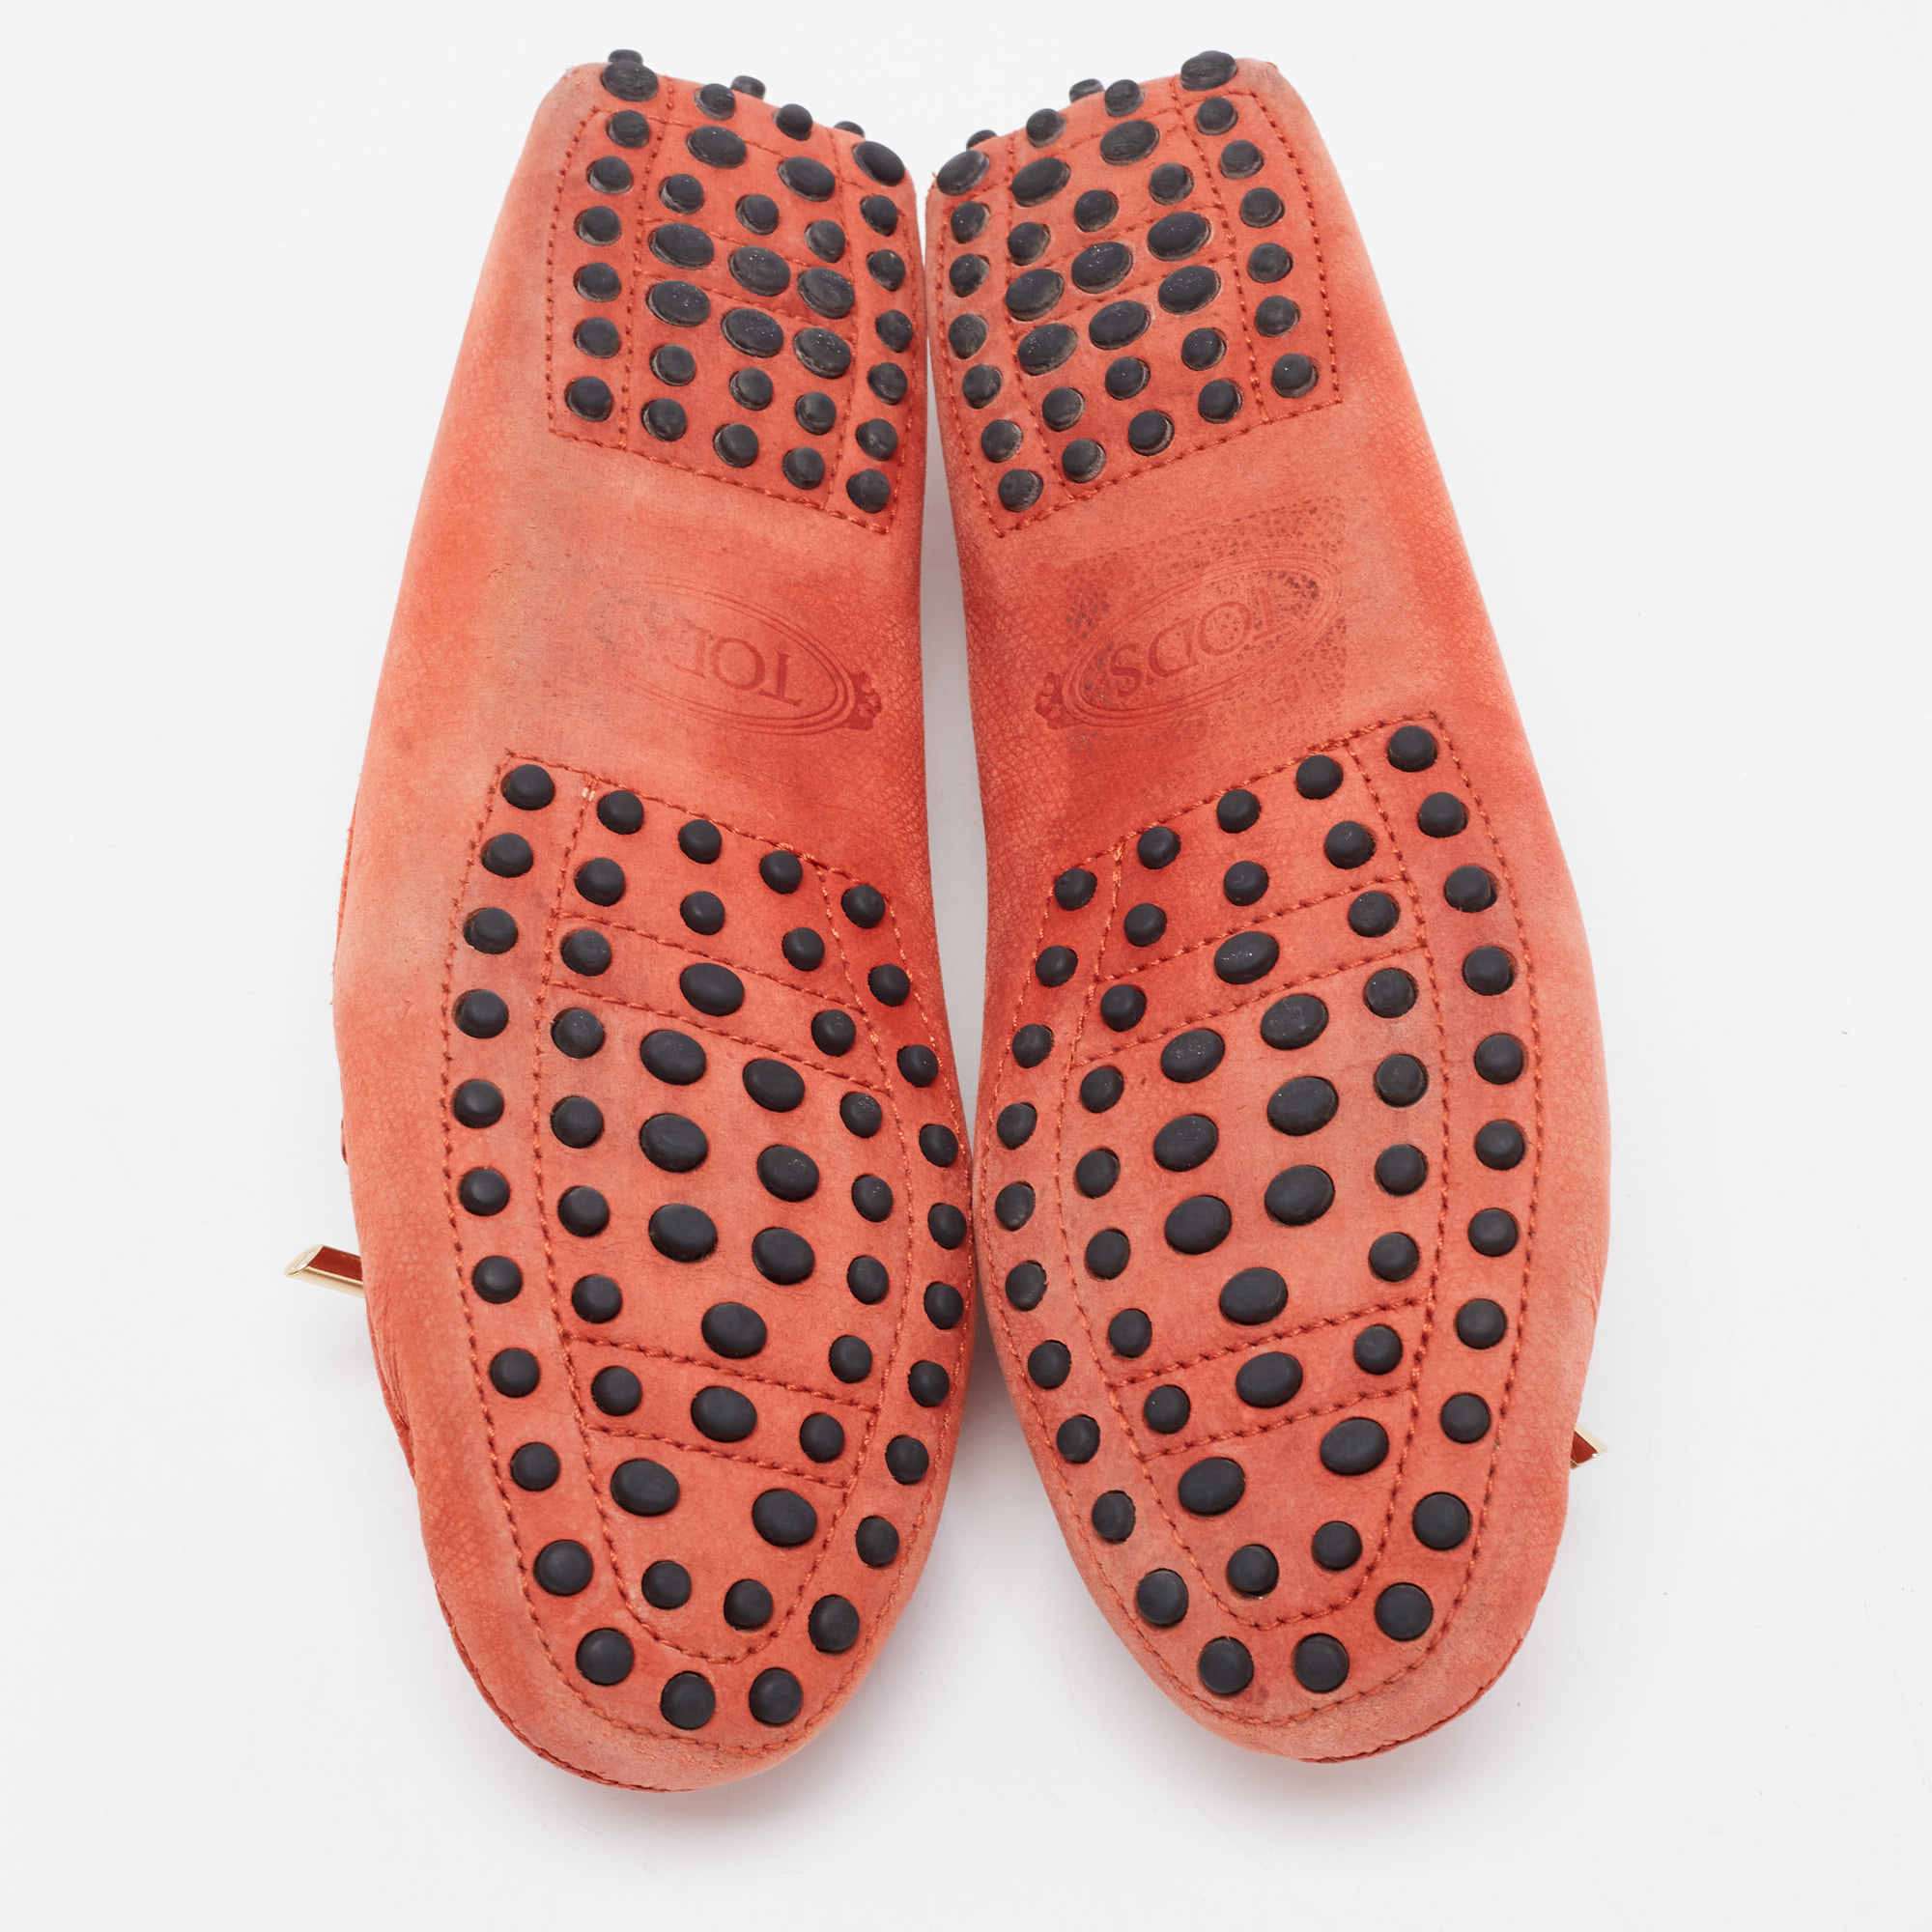 Tod's Orange Nubuck Leather Bow Detail Slip On Loafers Size 37